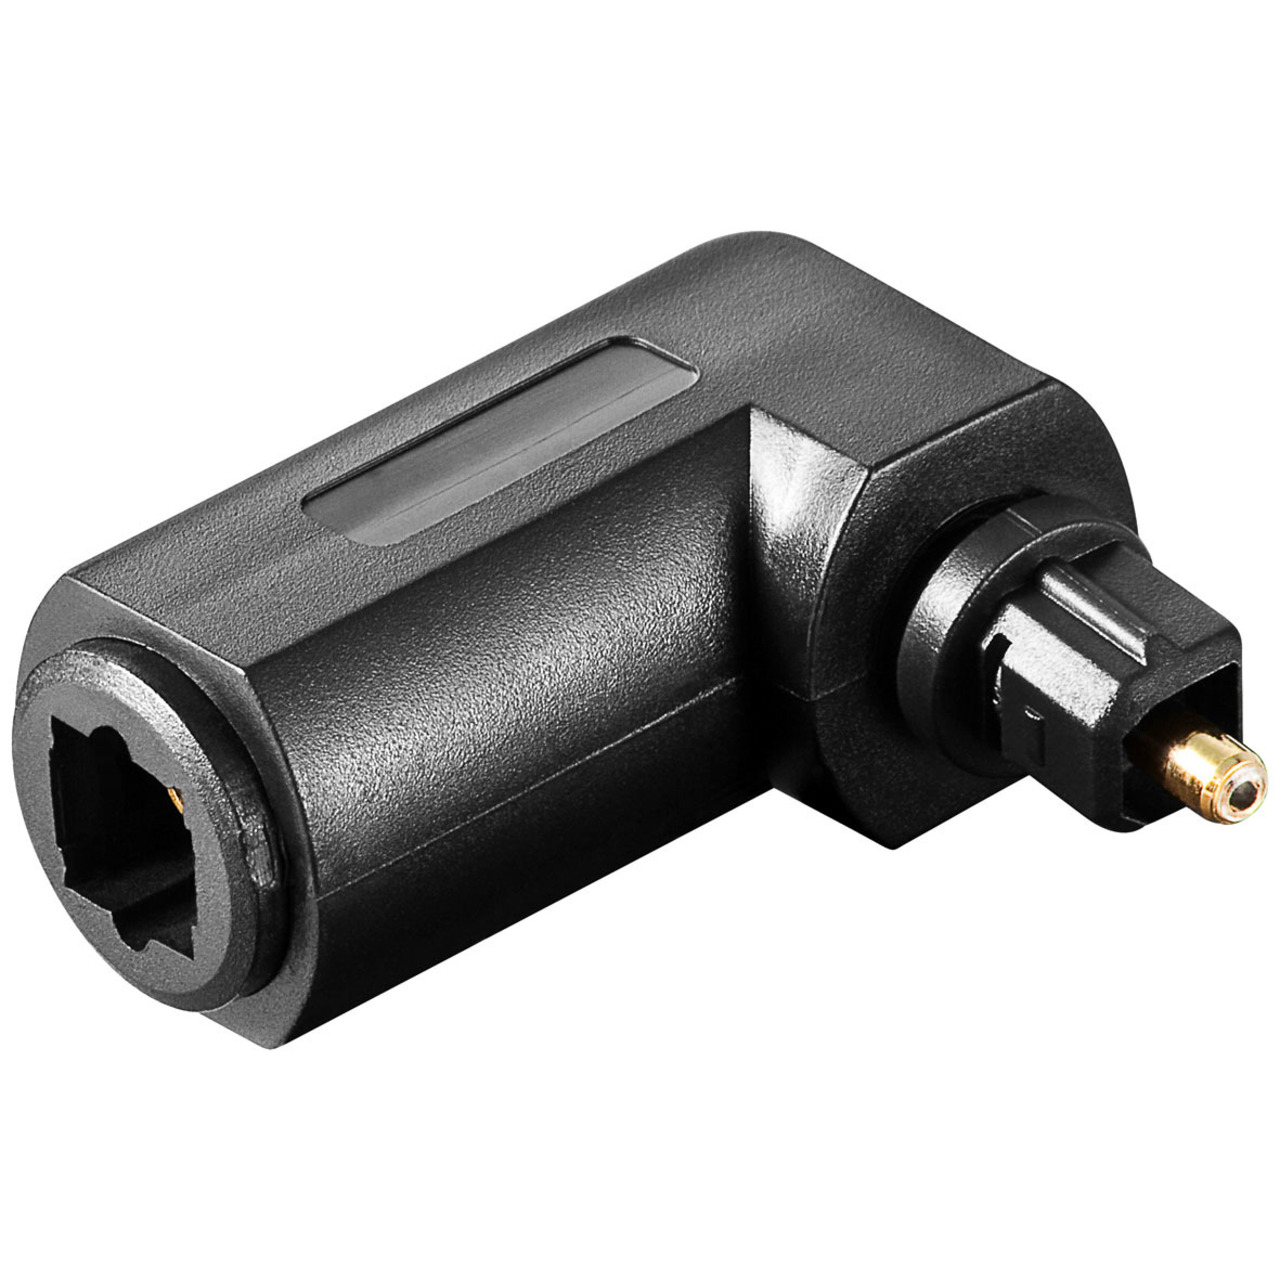 Audio-Adapter Toslinkstecker-Kupplung- drehbar